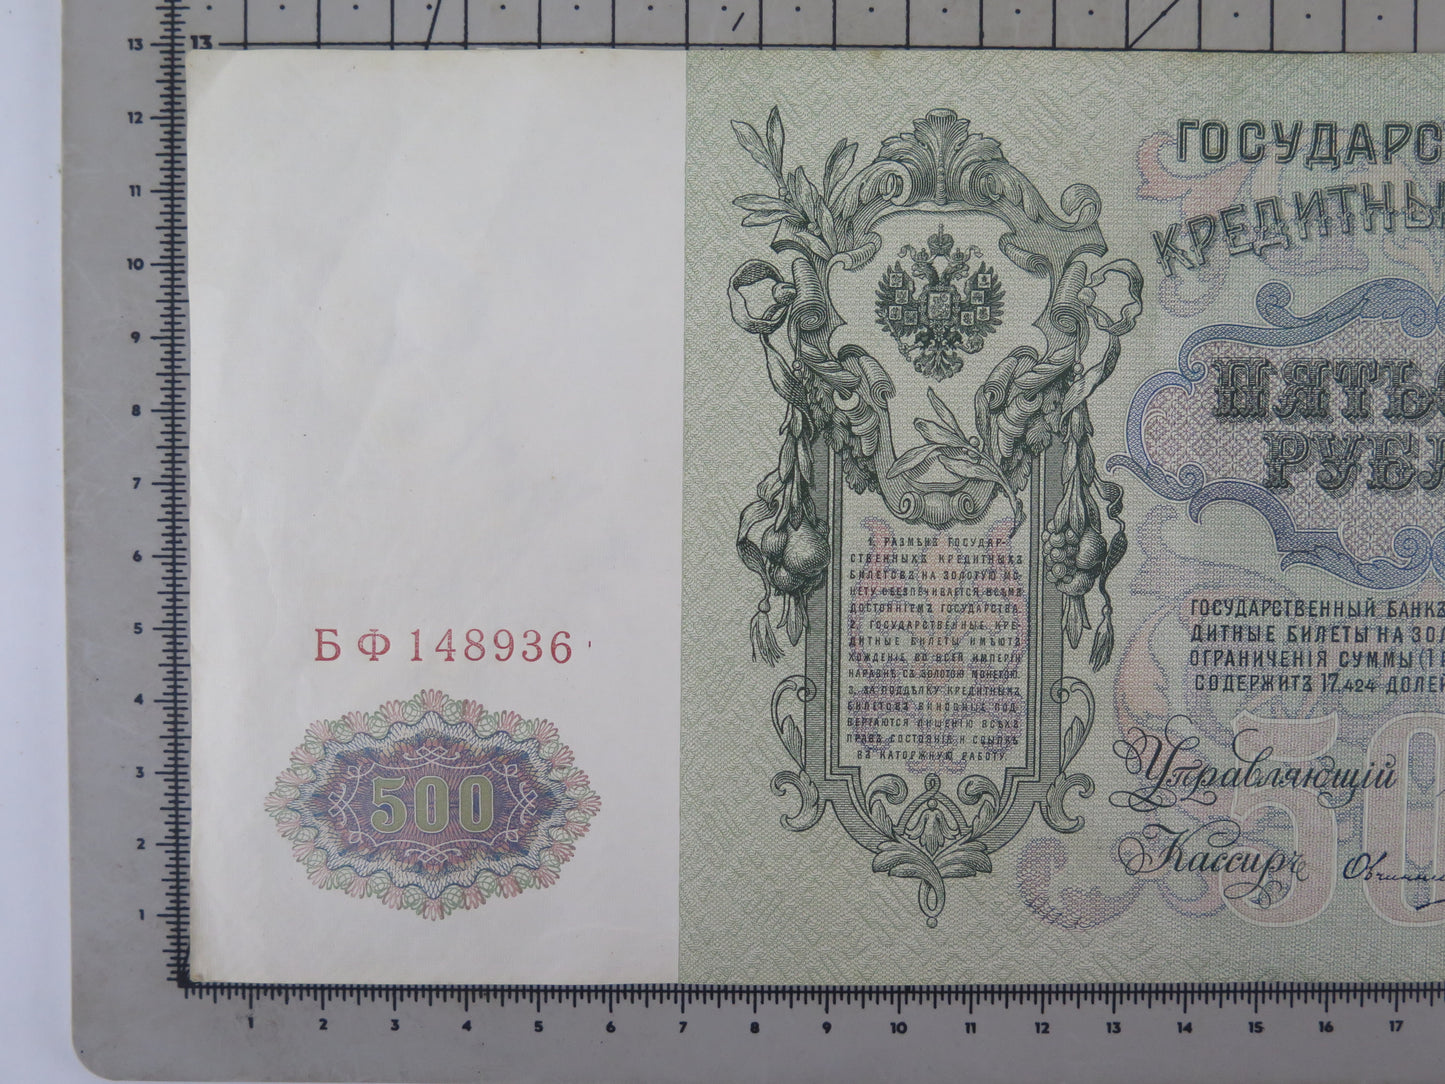 TWO BANKNOTES 500 RUBLES 1912 RUSSIA EMPIRE PAPER MONEY ANTIQUE MONEY BM53.5H